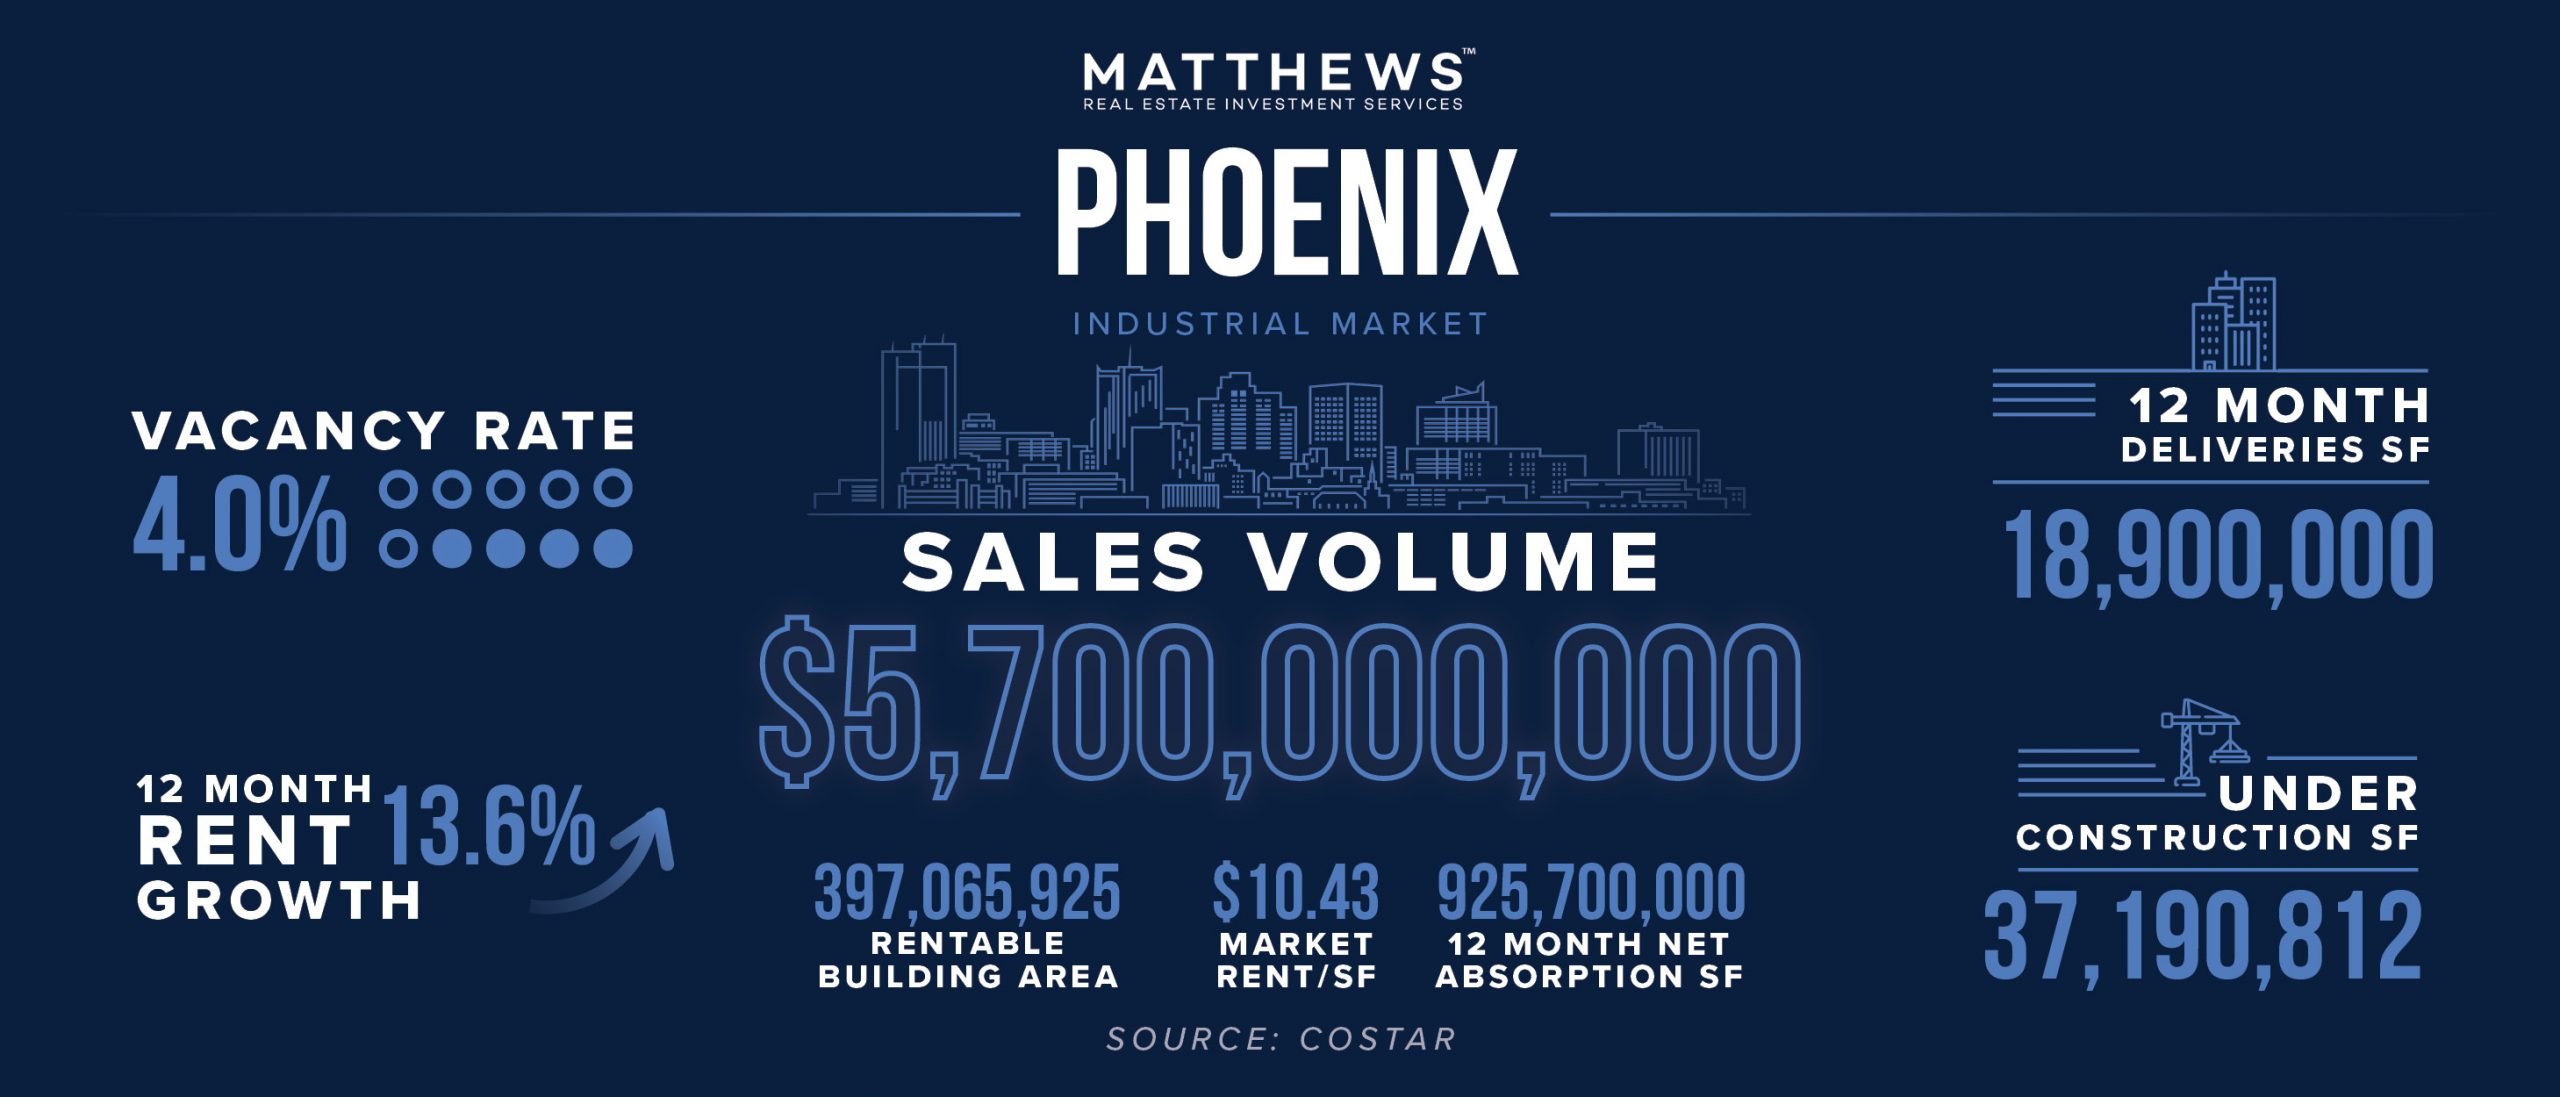 phoenix industrial market statistics